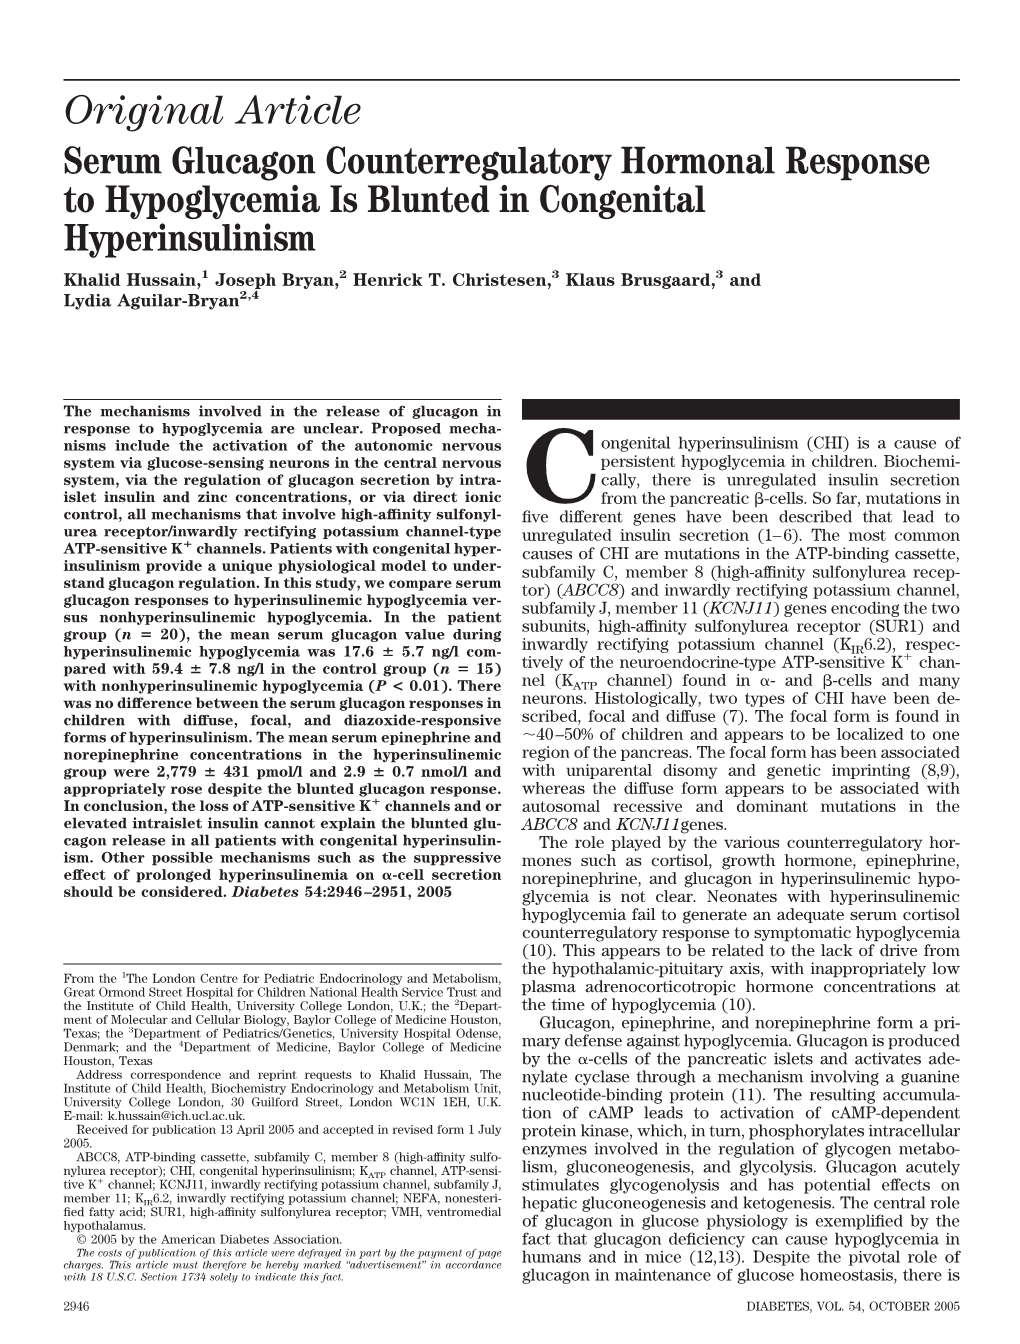 Original Article Serum Glucagon Counterregulatory Hormonal Response to Hypoglycemia Is Blunted in Congenital Hyperinsulinism Khalid Hussain,1 Joseph Bryan,2 Henrick T